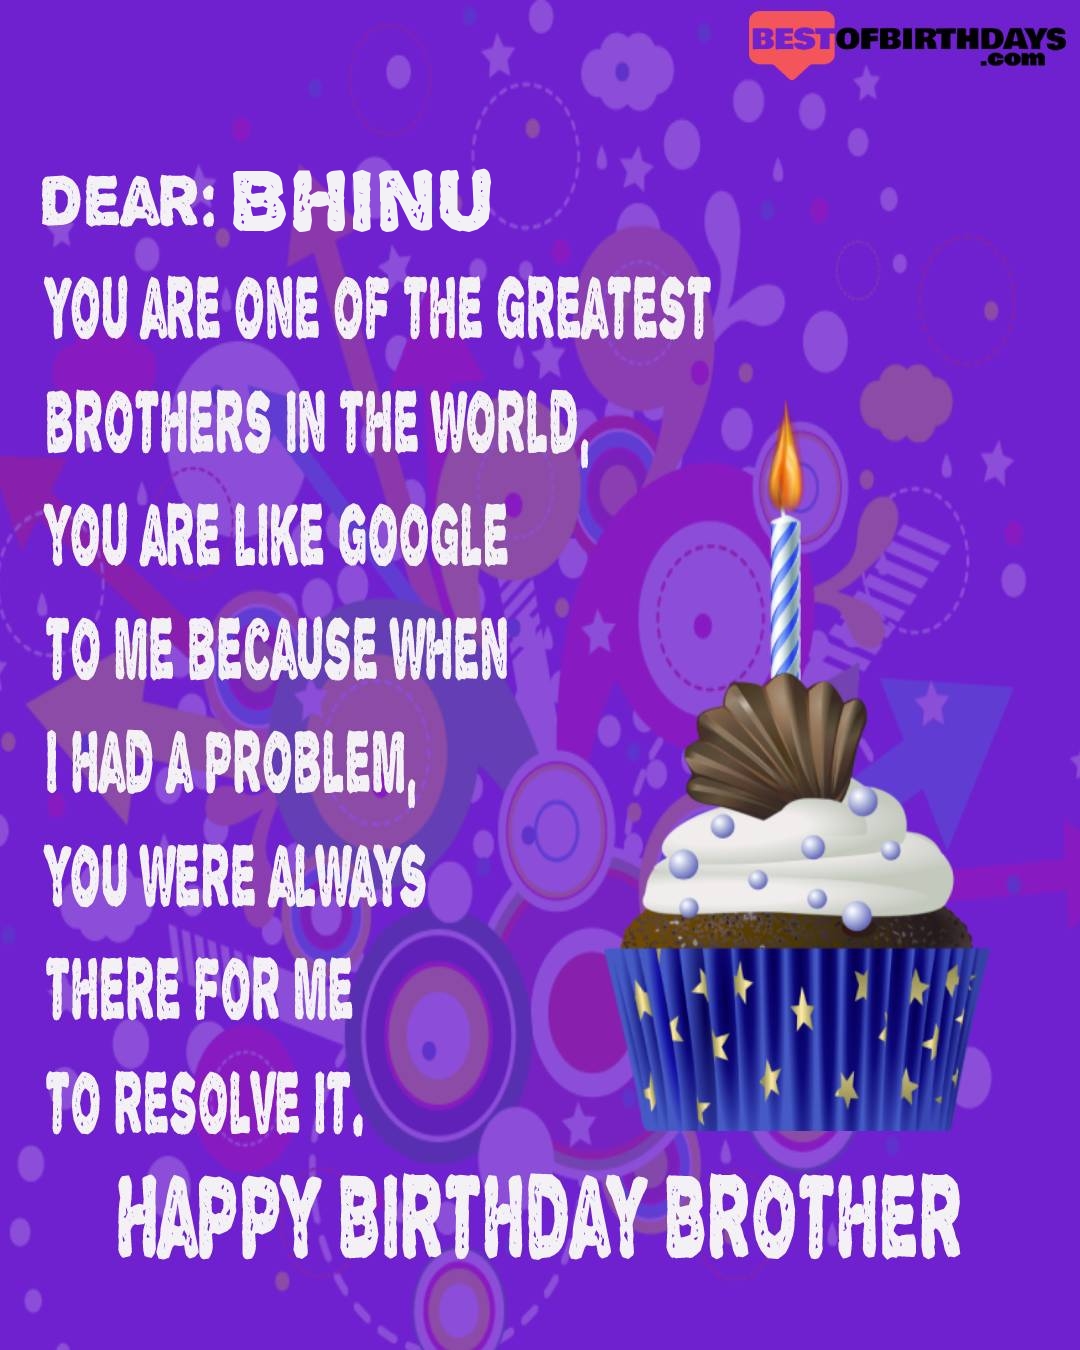 Happy birthday bhinu bhai brother bro